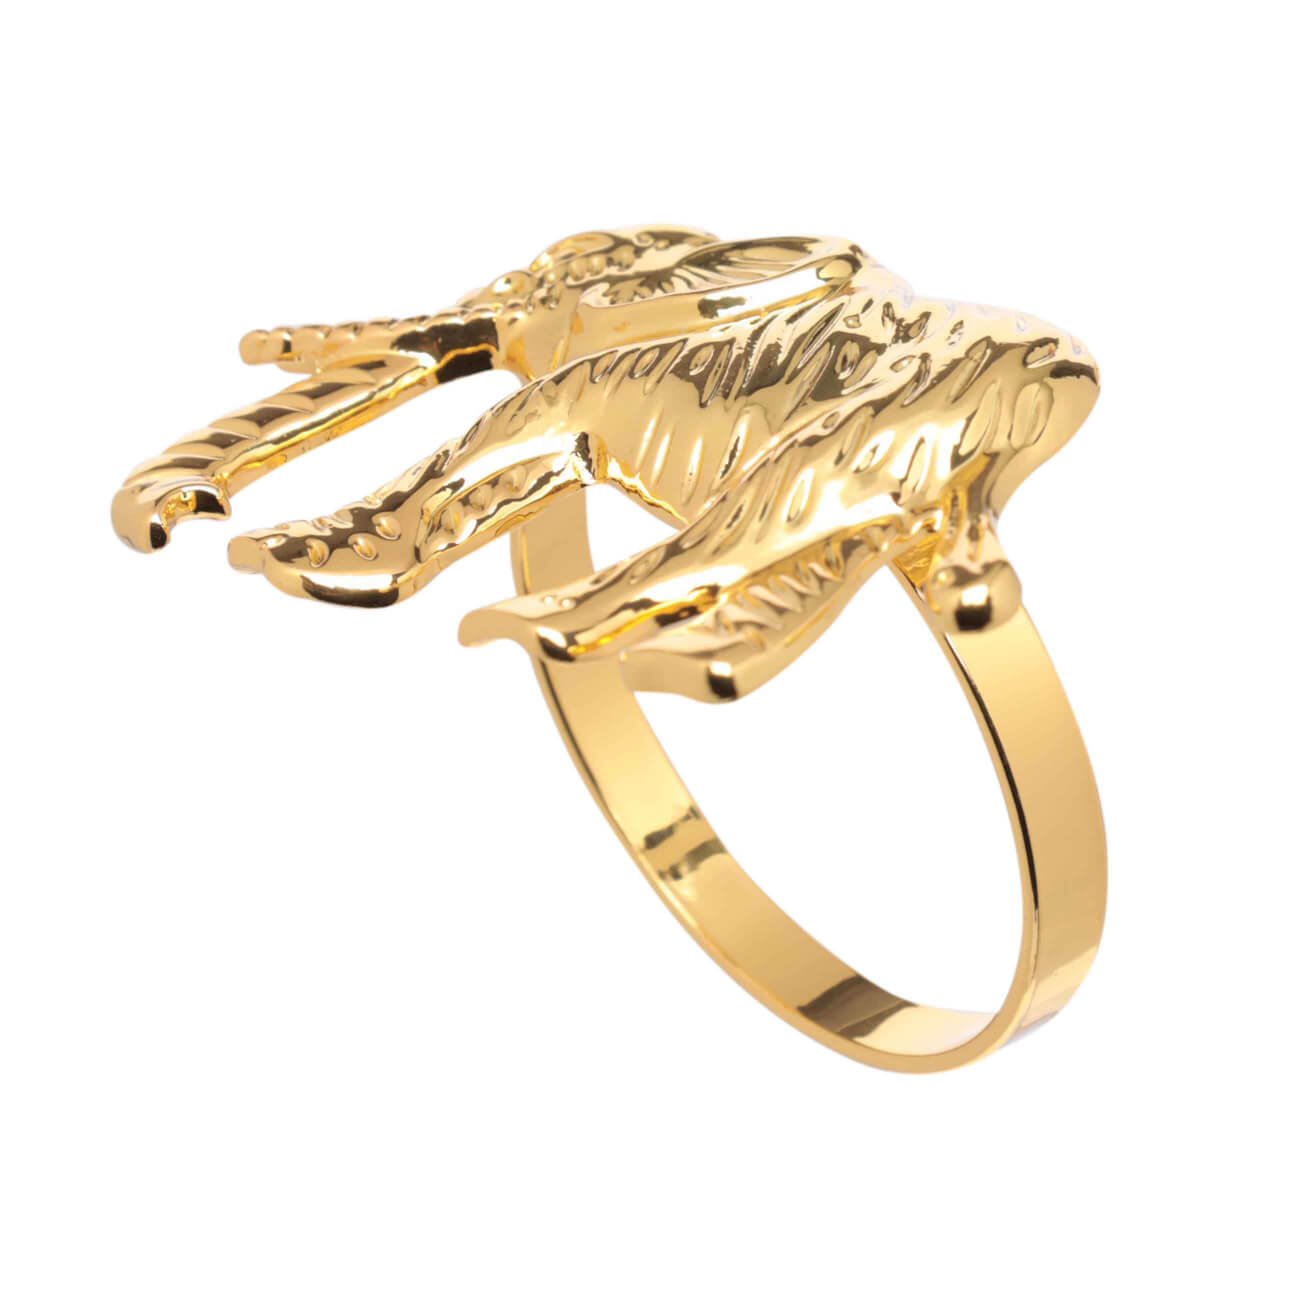 Кольцо для салфеток, 6 см, металл, золотистое, Слон, Royal jungle